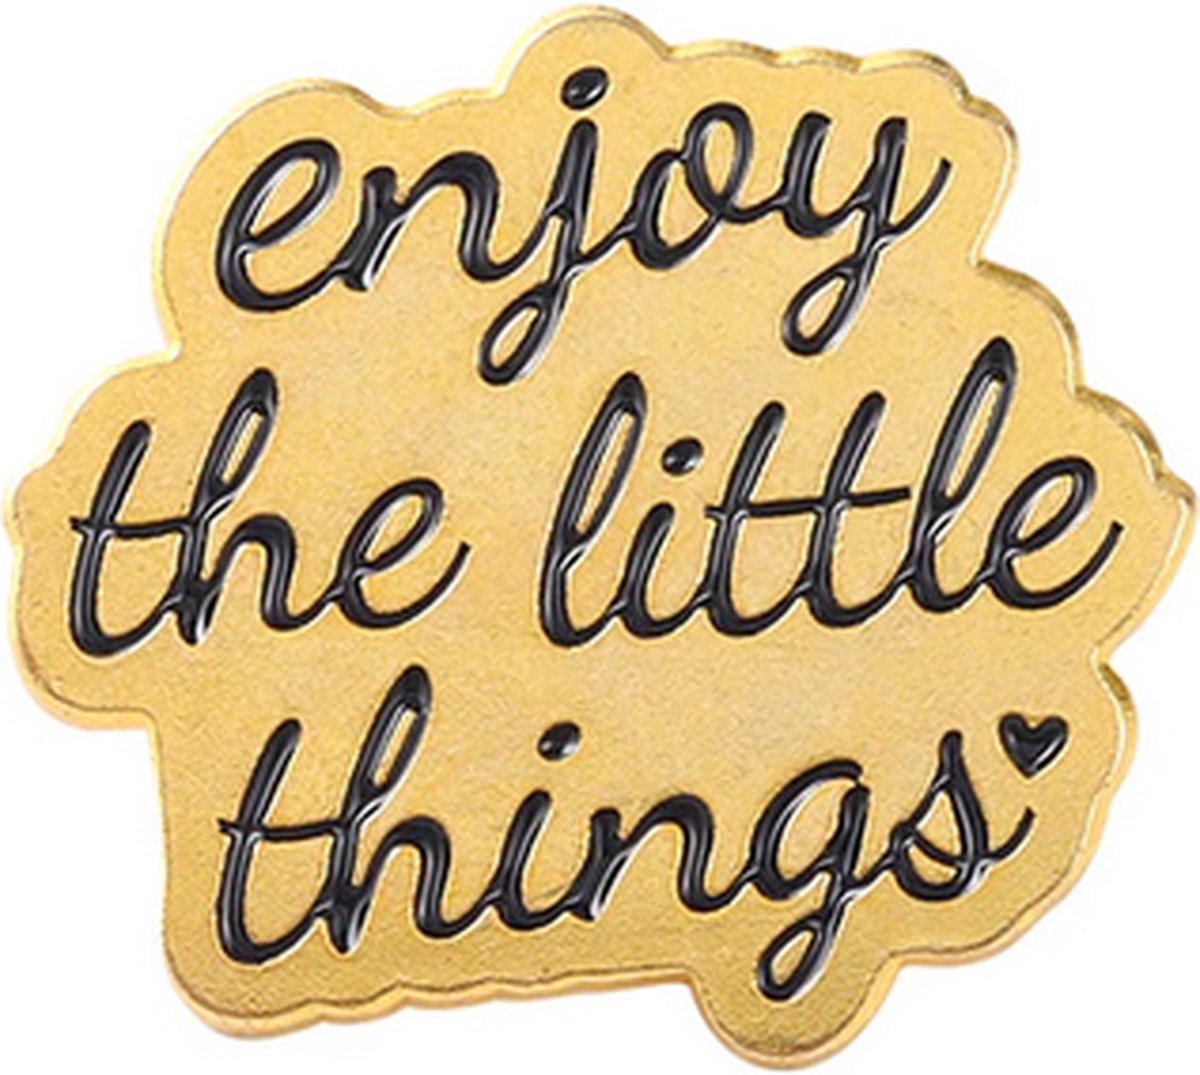 Pin ''Enjoy the little things'' genieten, klein, goud, broche, kledingspeld